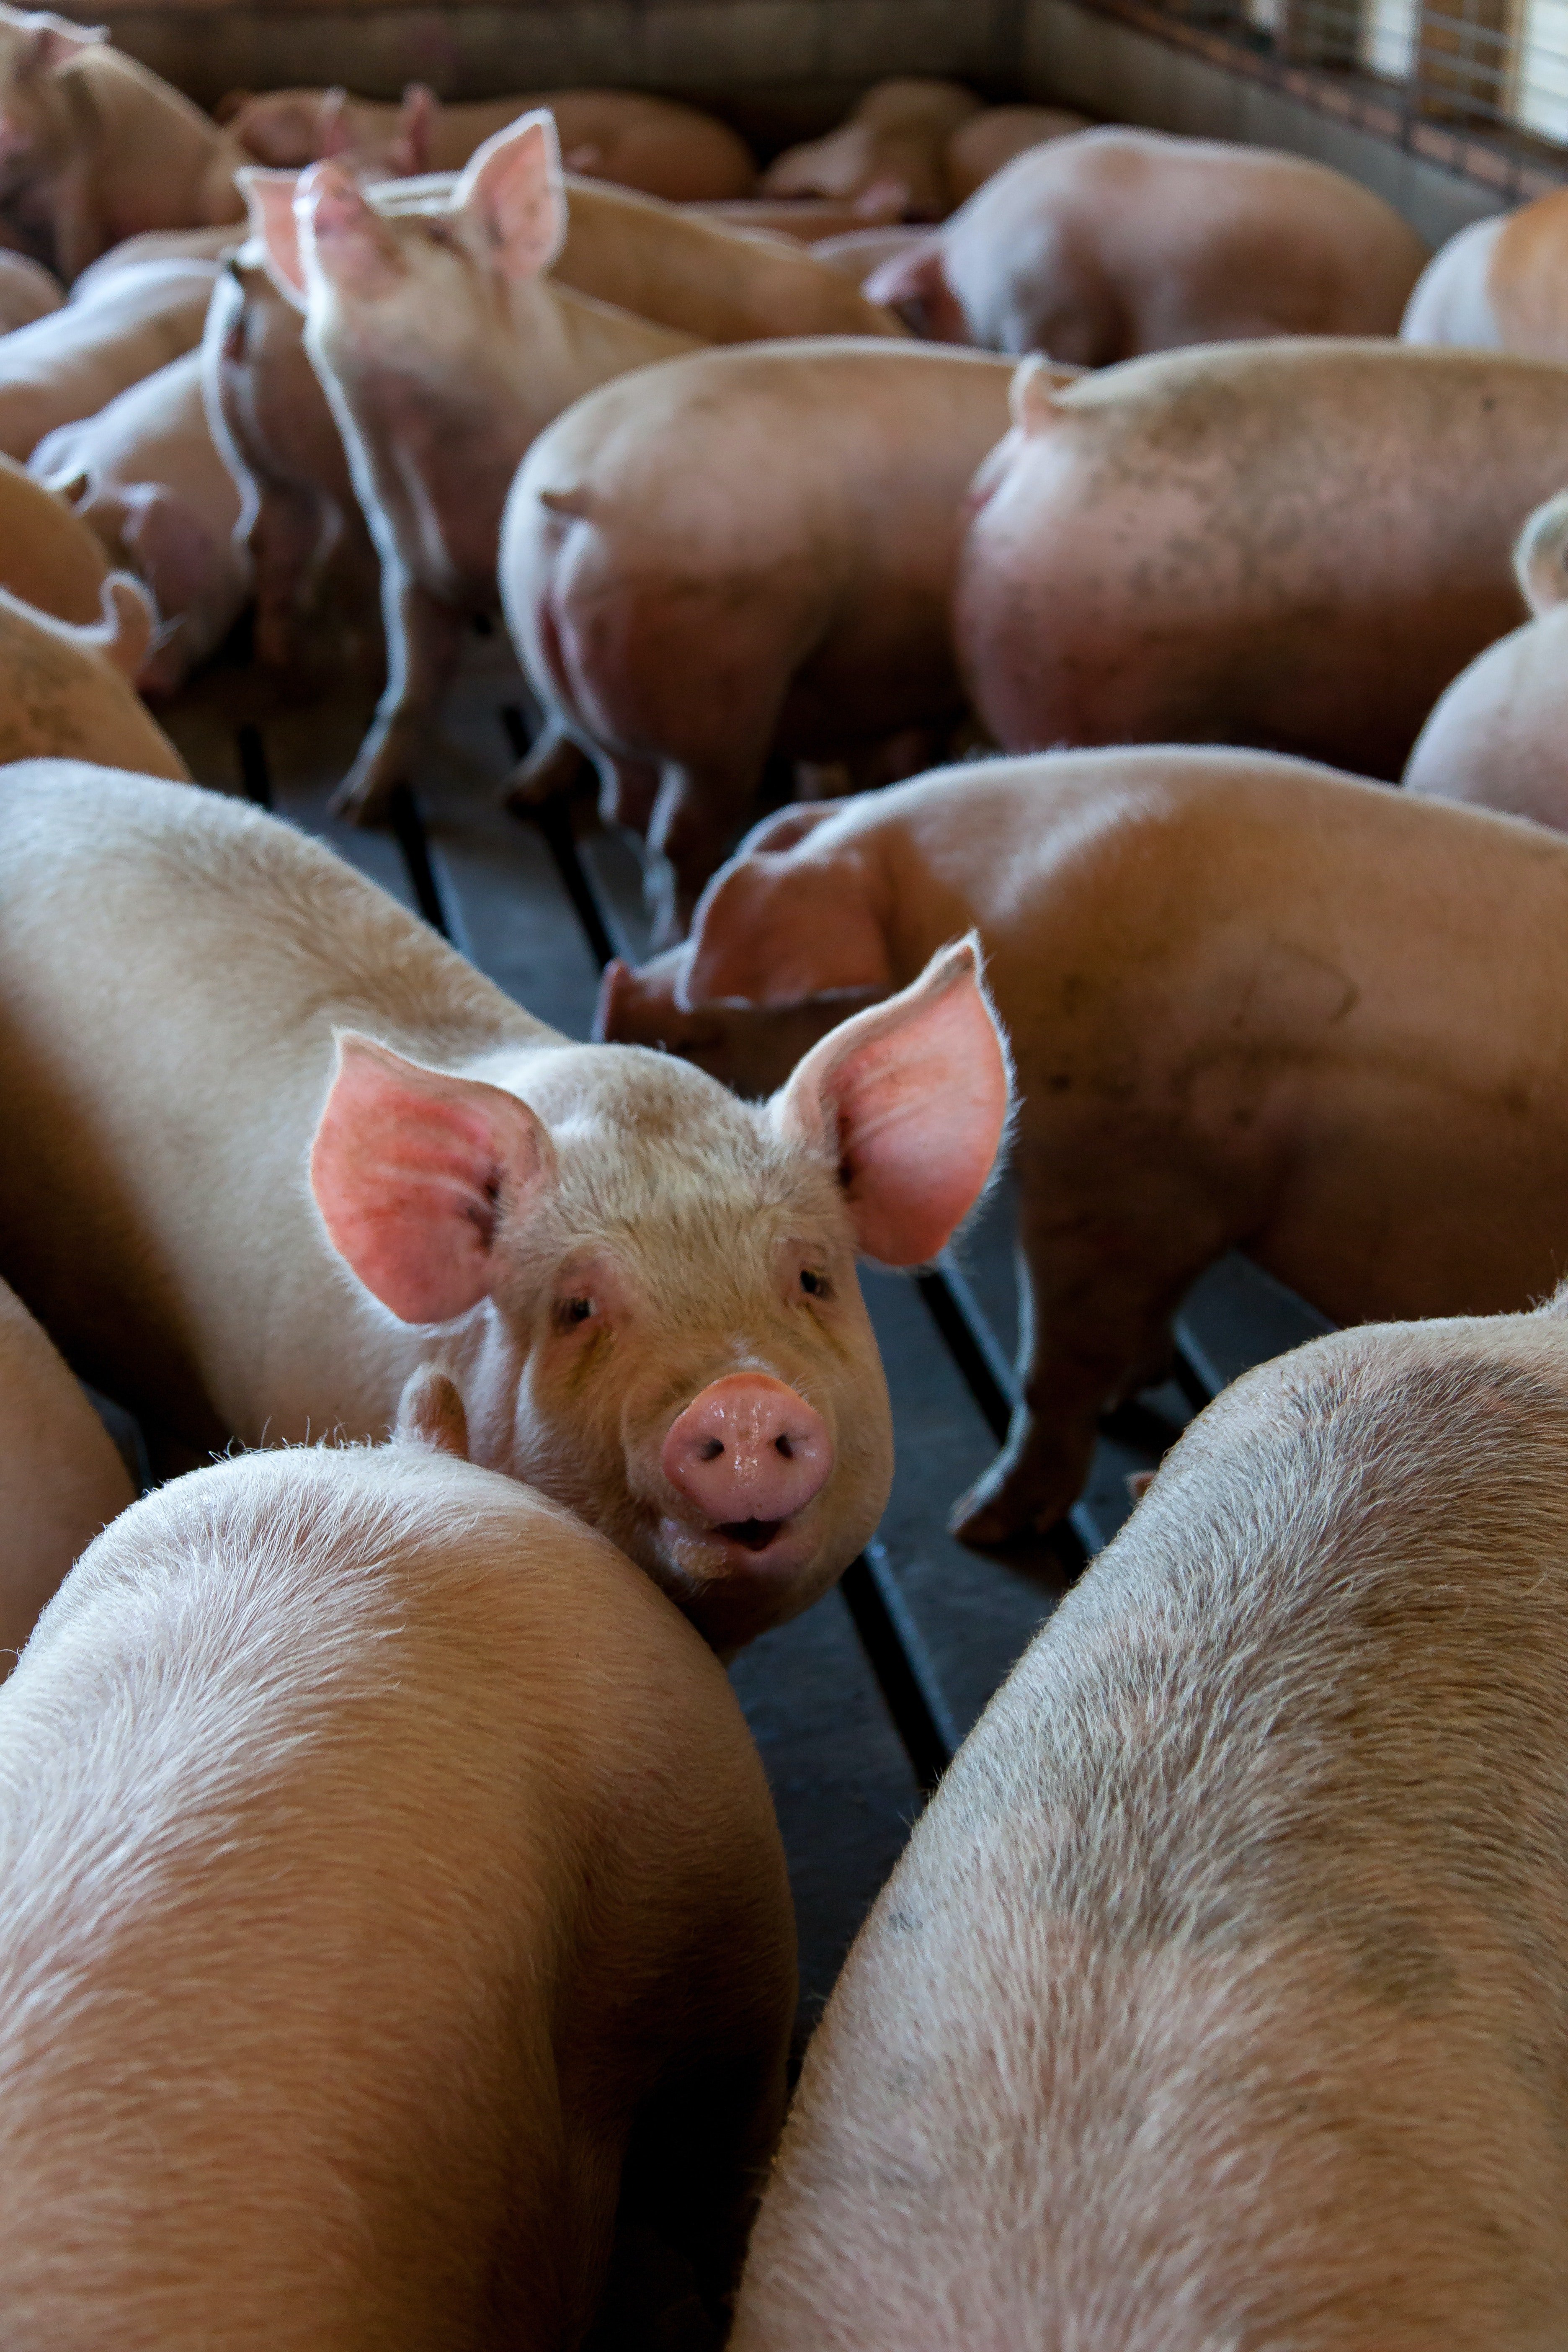 The farmer had an unusual way of feeding the pigs. | Photo: Pexels/Mark Stebnicki